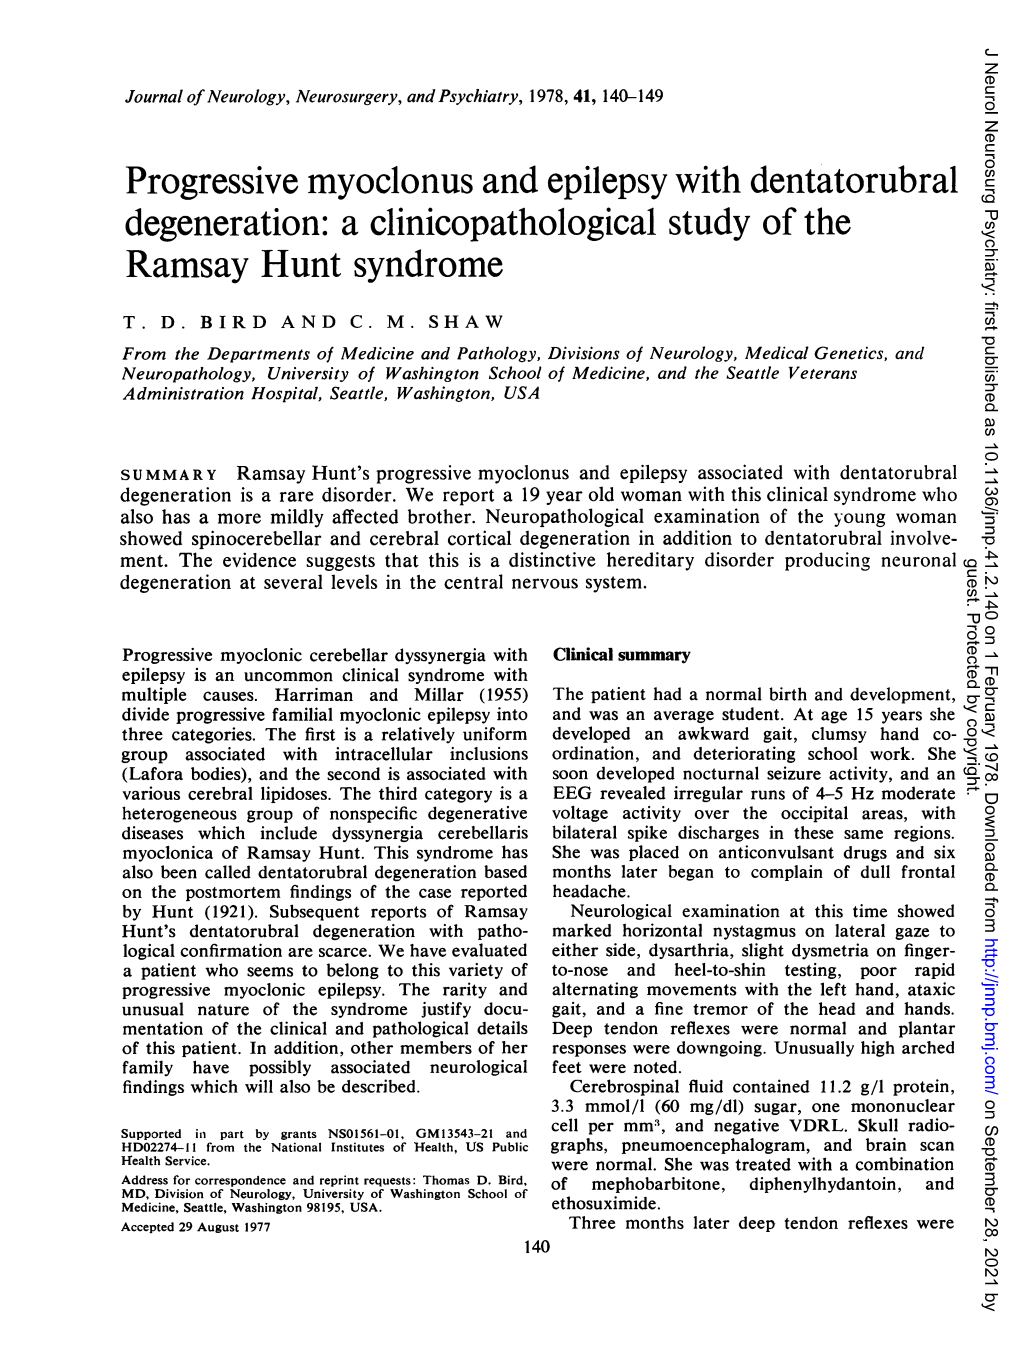 Progressive Myoclonus and Epilepsy with Dentatorubral Degeneration: a Clinicopathological Study of the Ramsay Hunt Syndrome